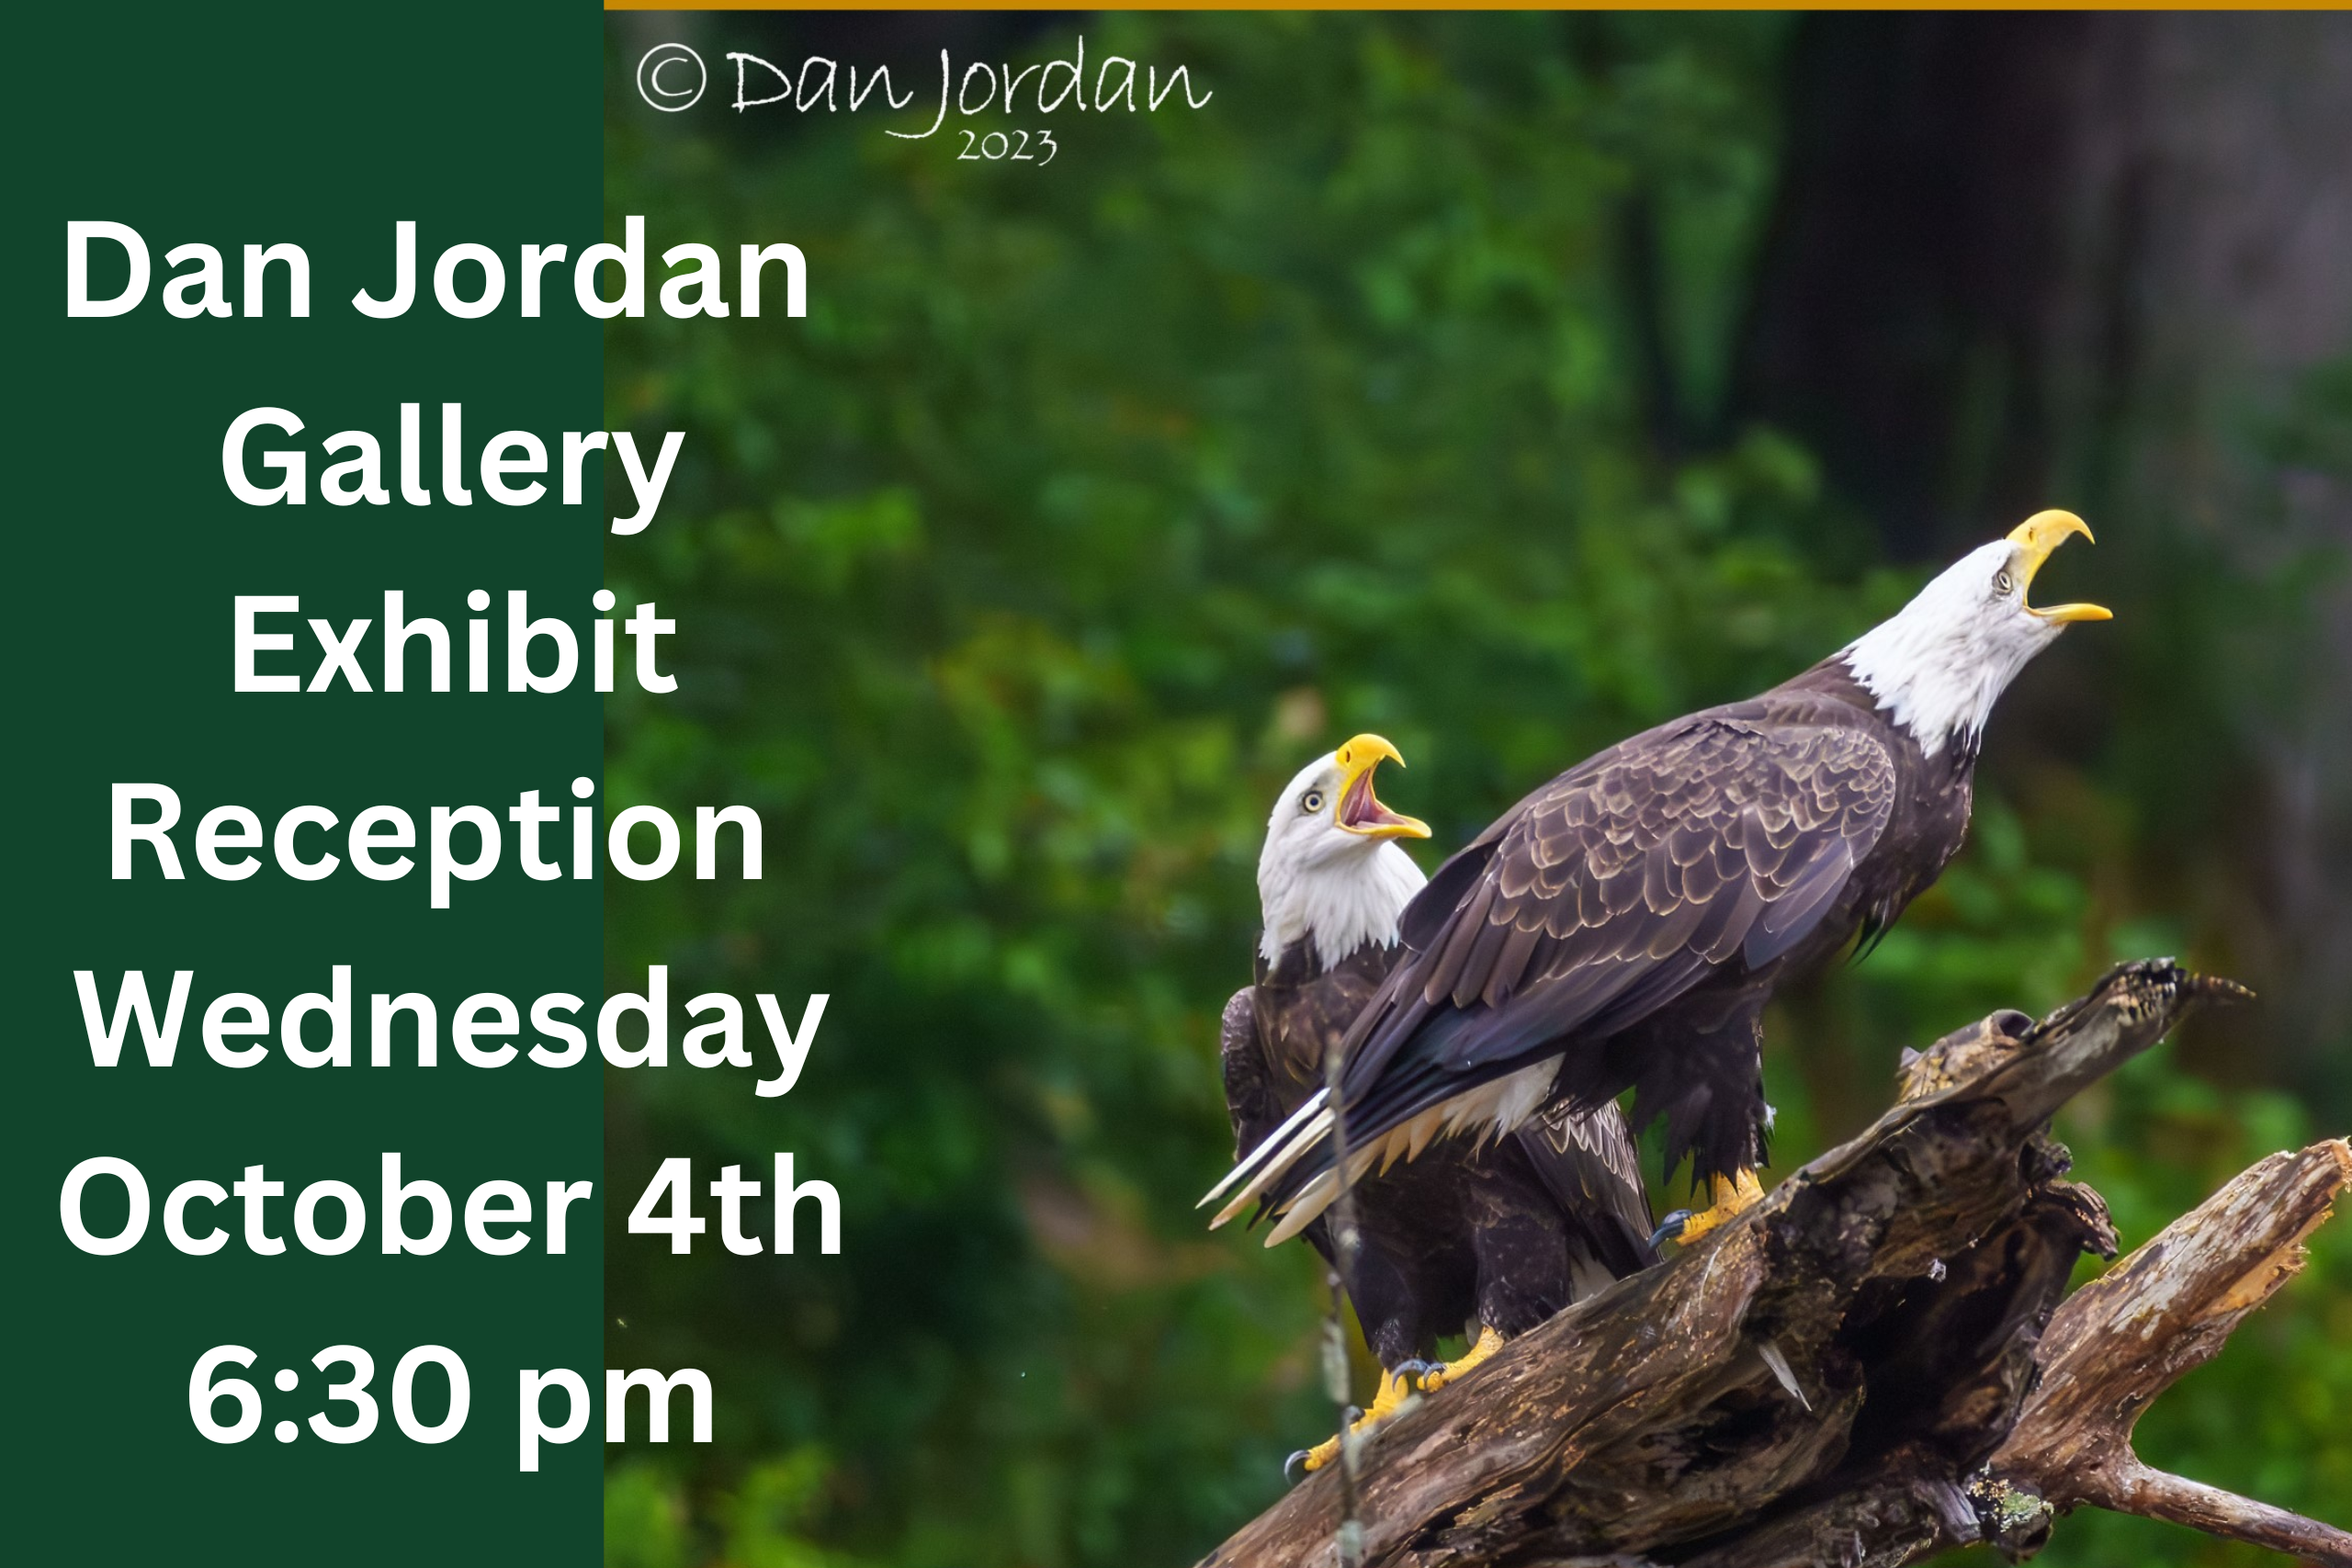 Dan Jordan Gallery Exhibit Reception